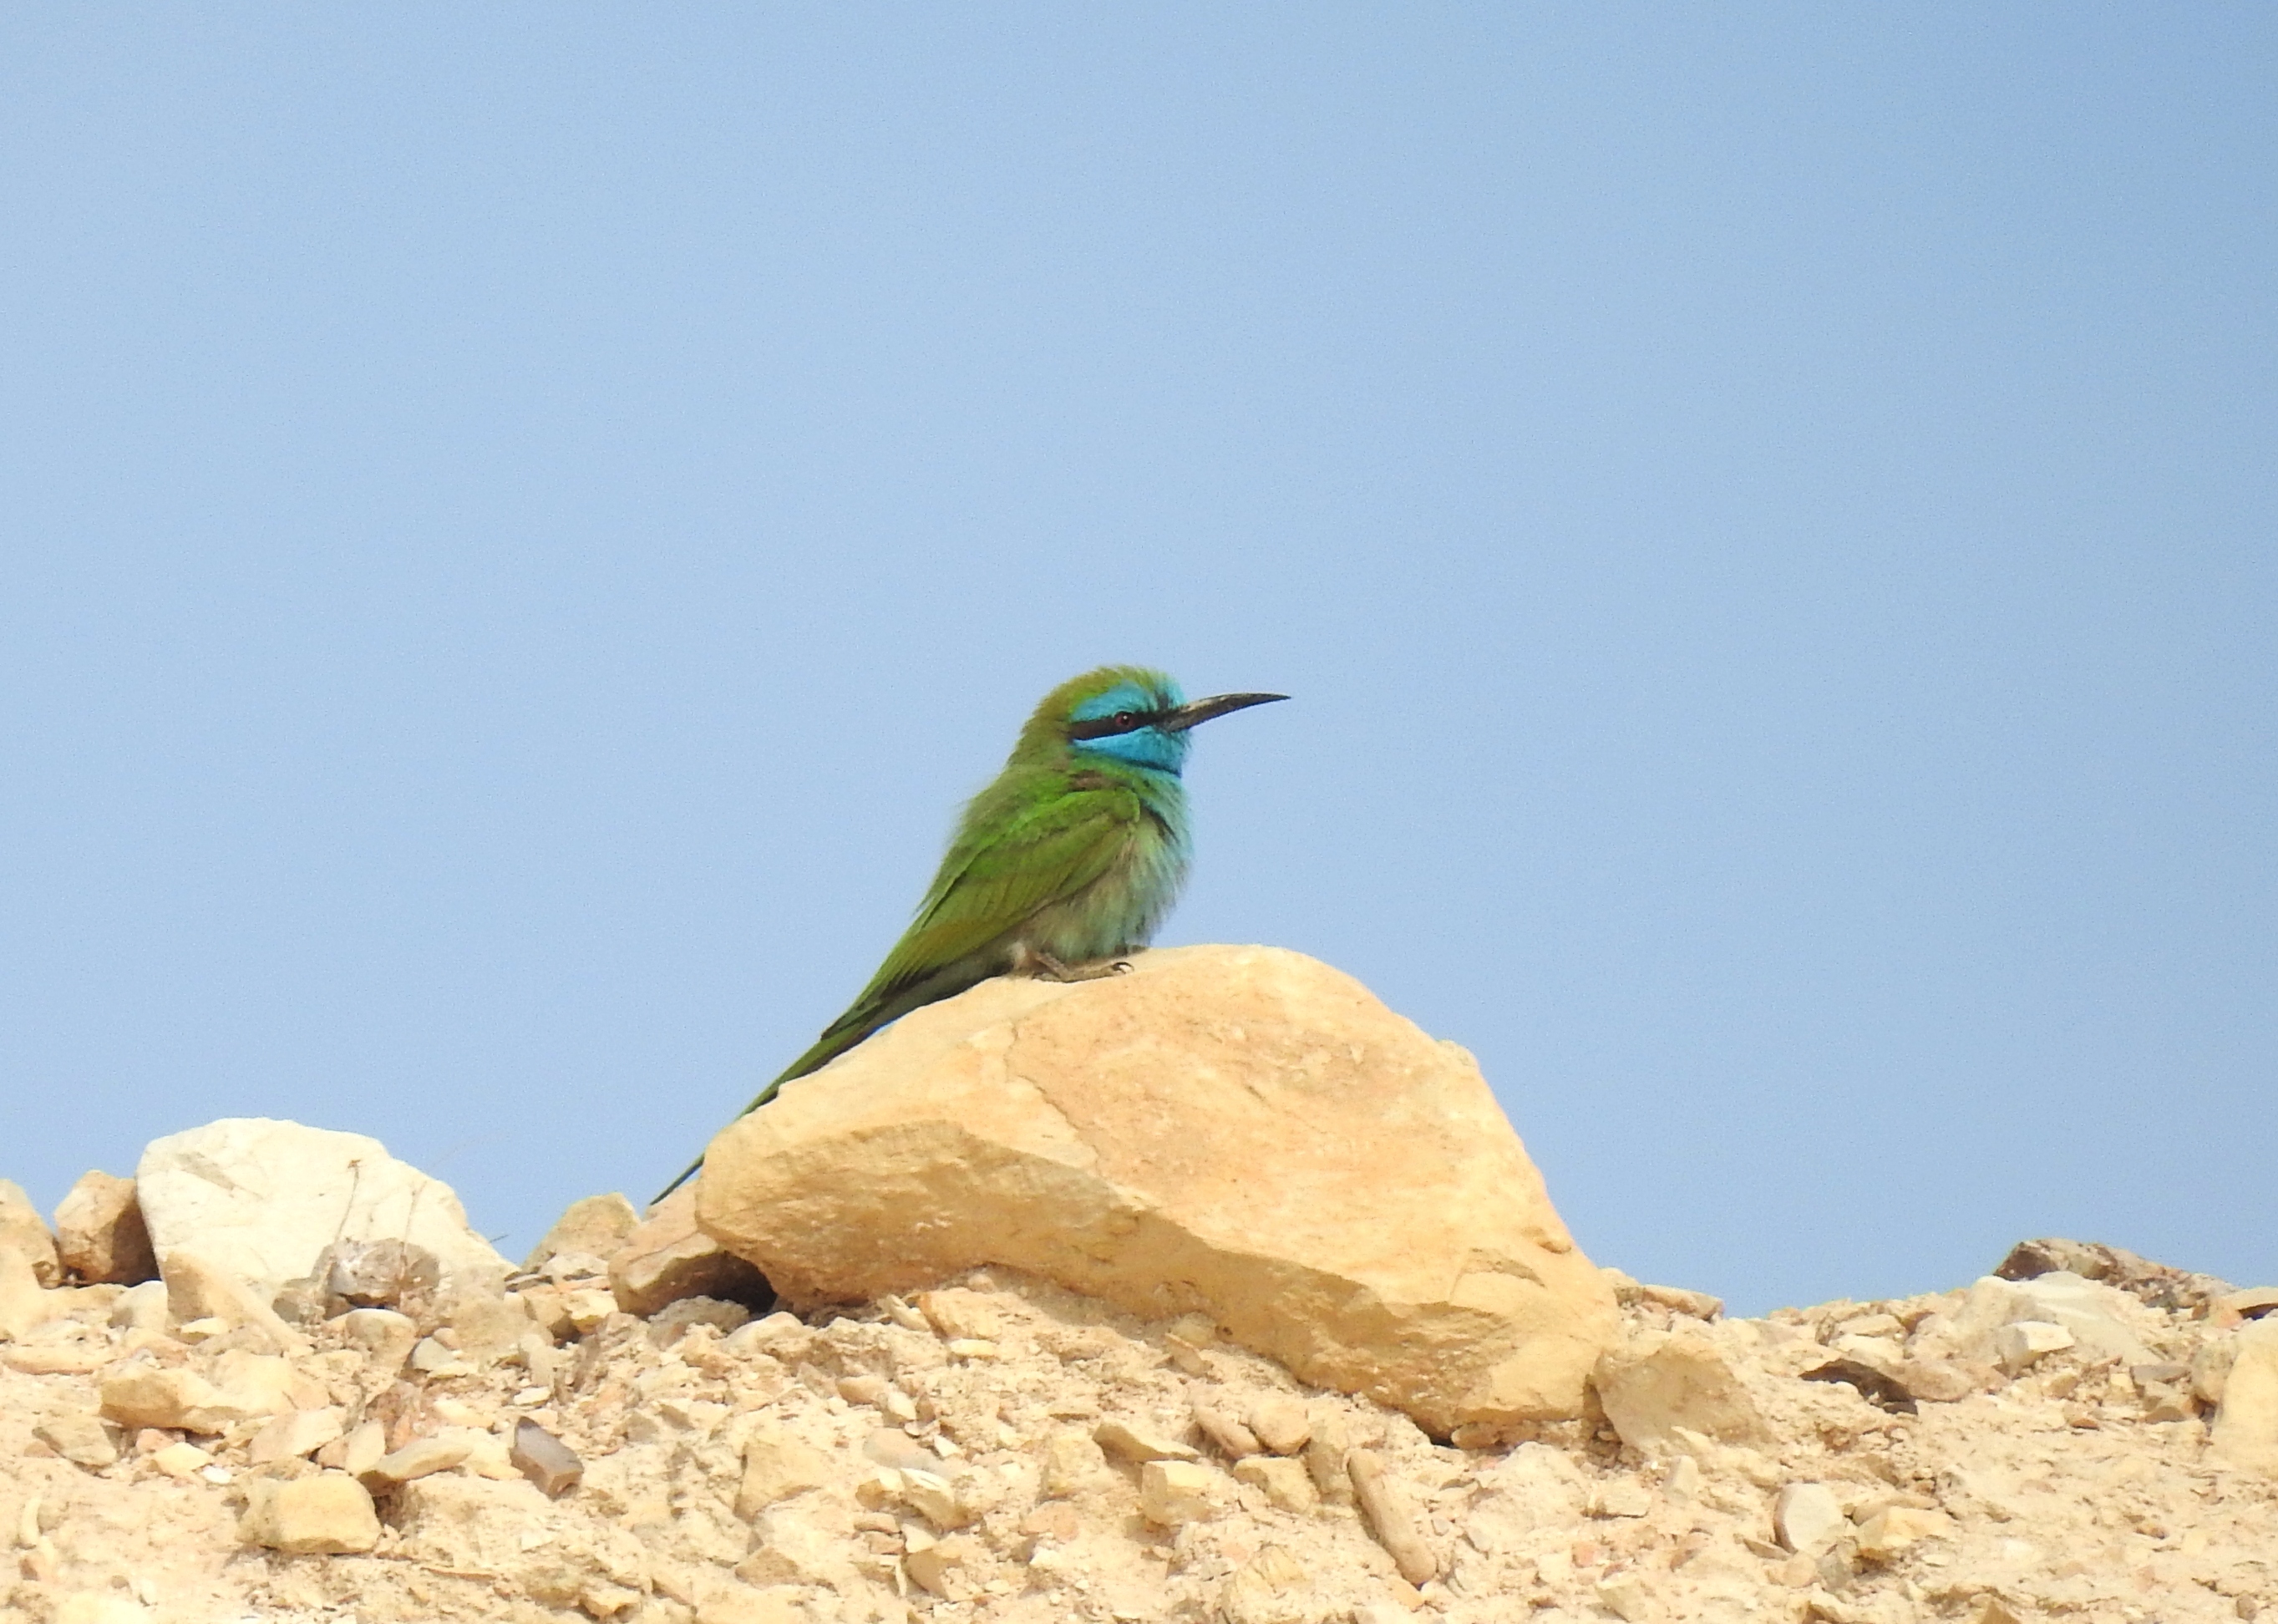 Under the watchful gaze of the Arabian green bee-eater